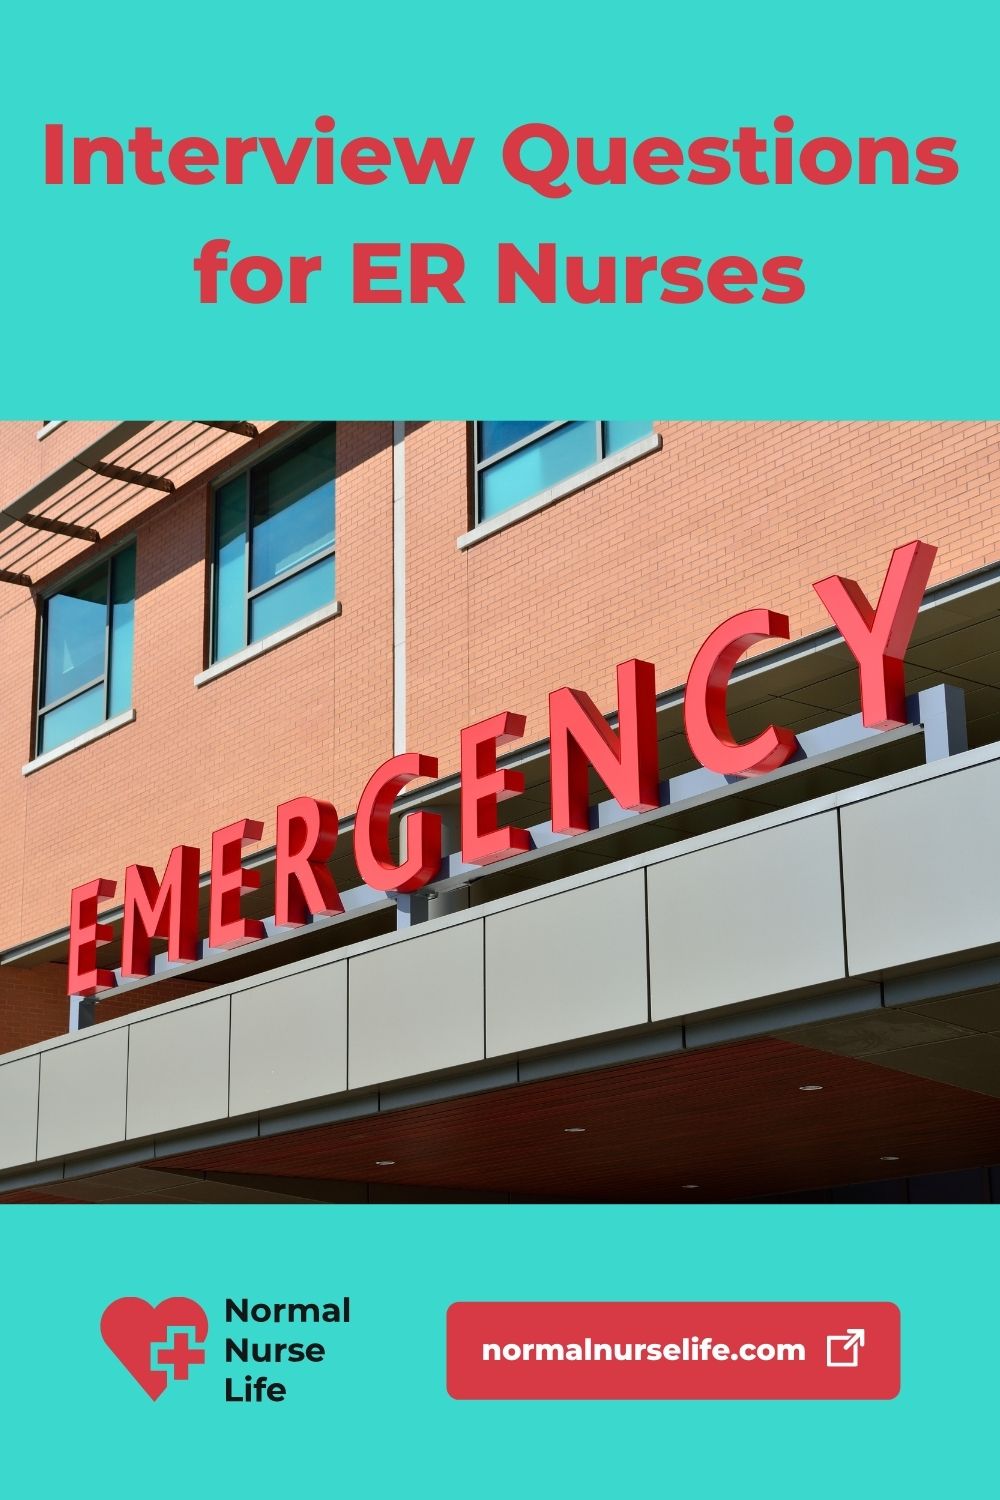 Interview questions for ER nurses